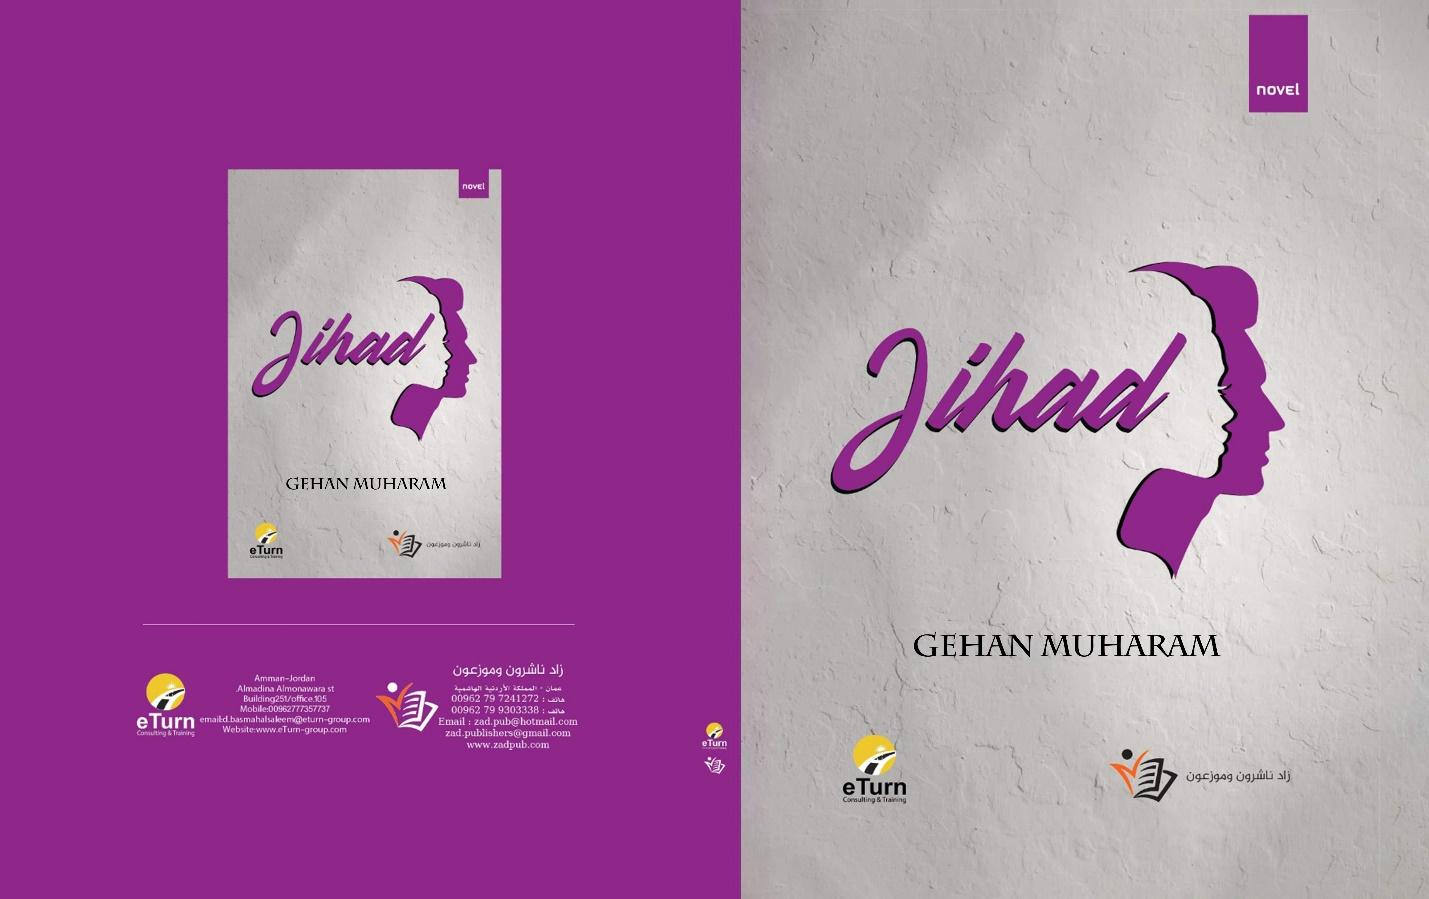 Gehan Muharam Explores the Depths of Human Struggles in Debut Novel 'Jihad'